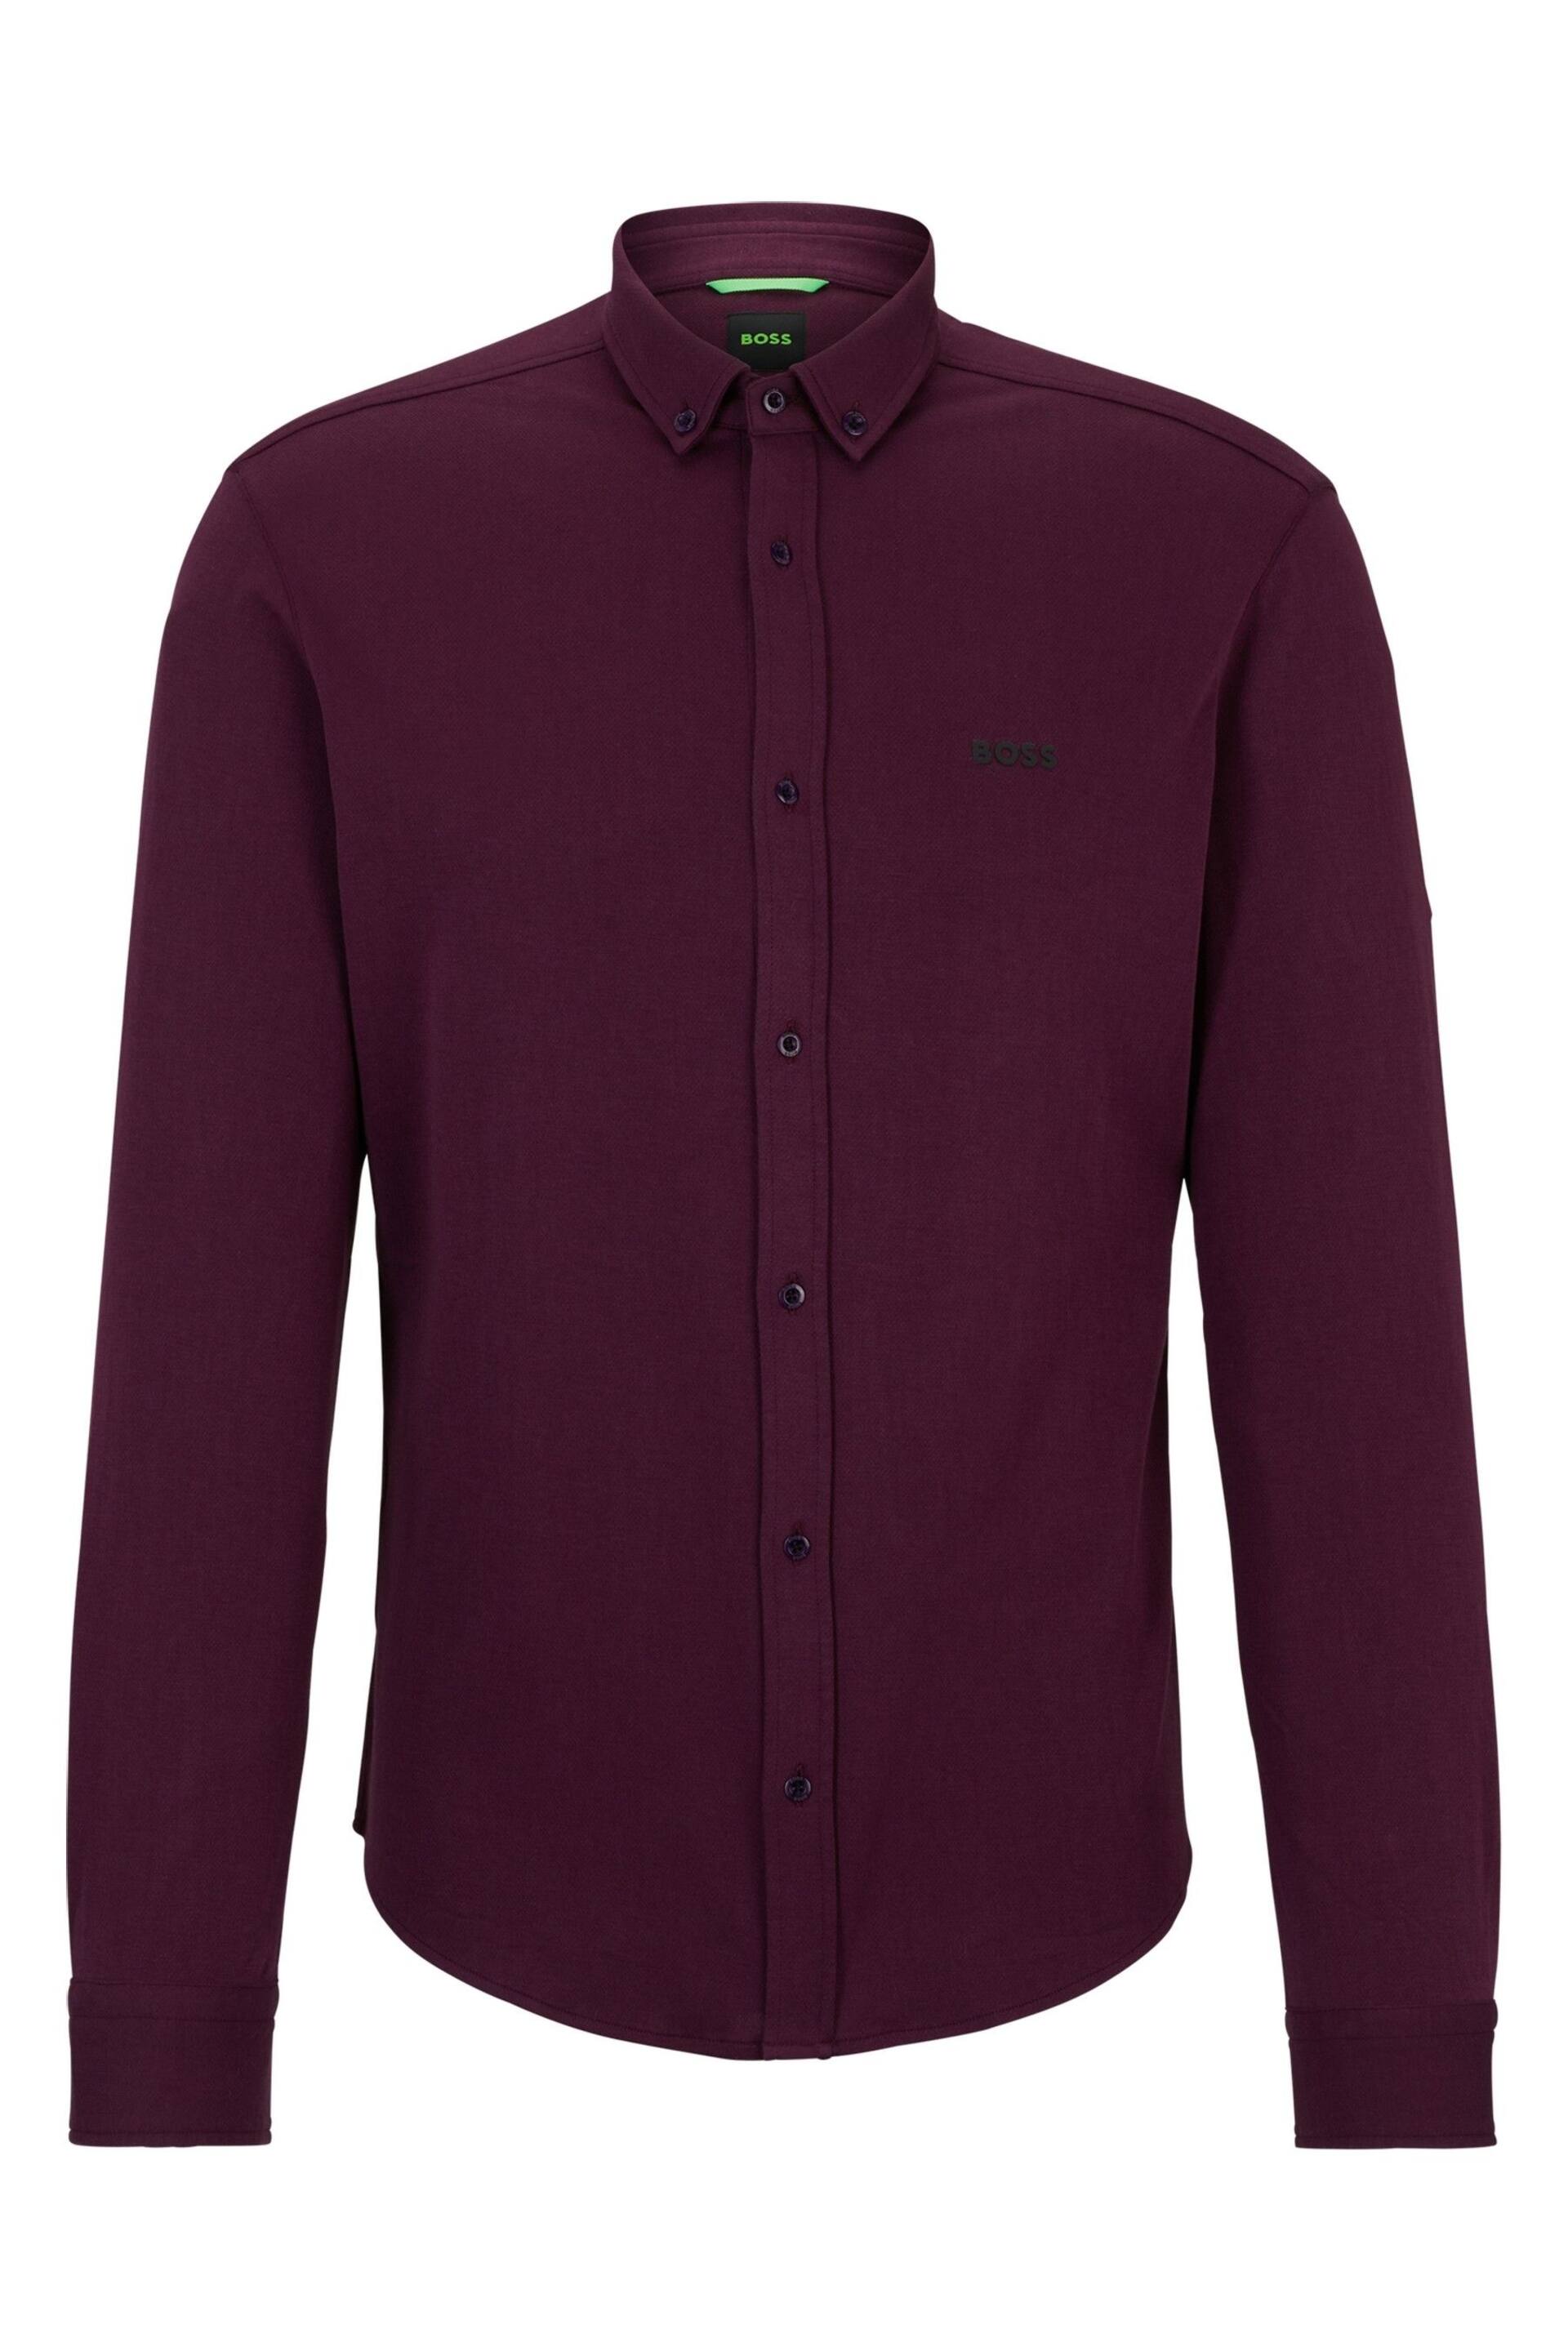 BOSS Purple Cotton Pique Regular Fit Shirt - Image 6 of 6